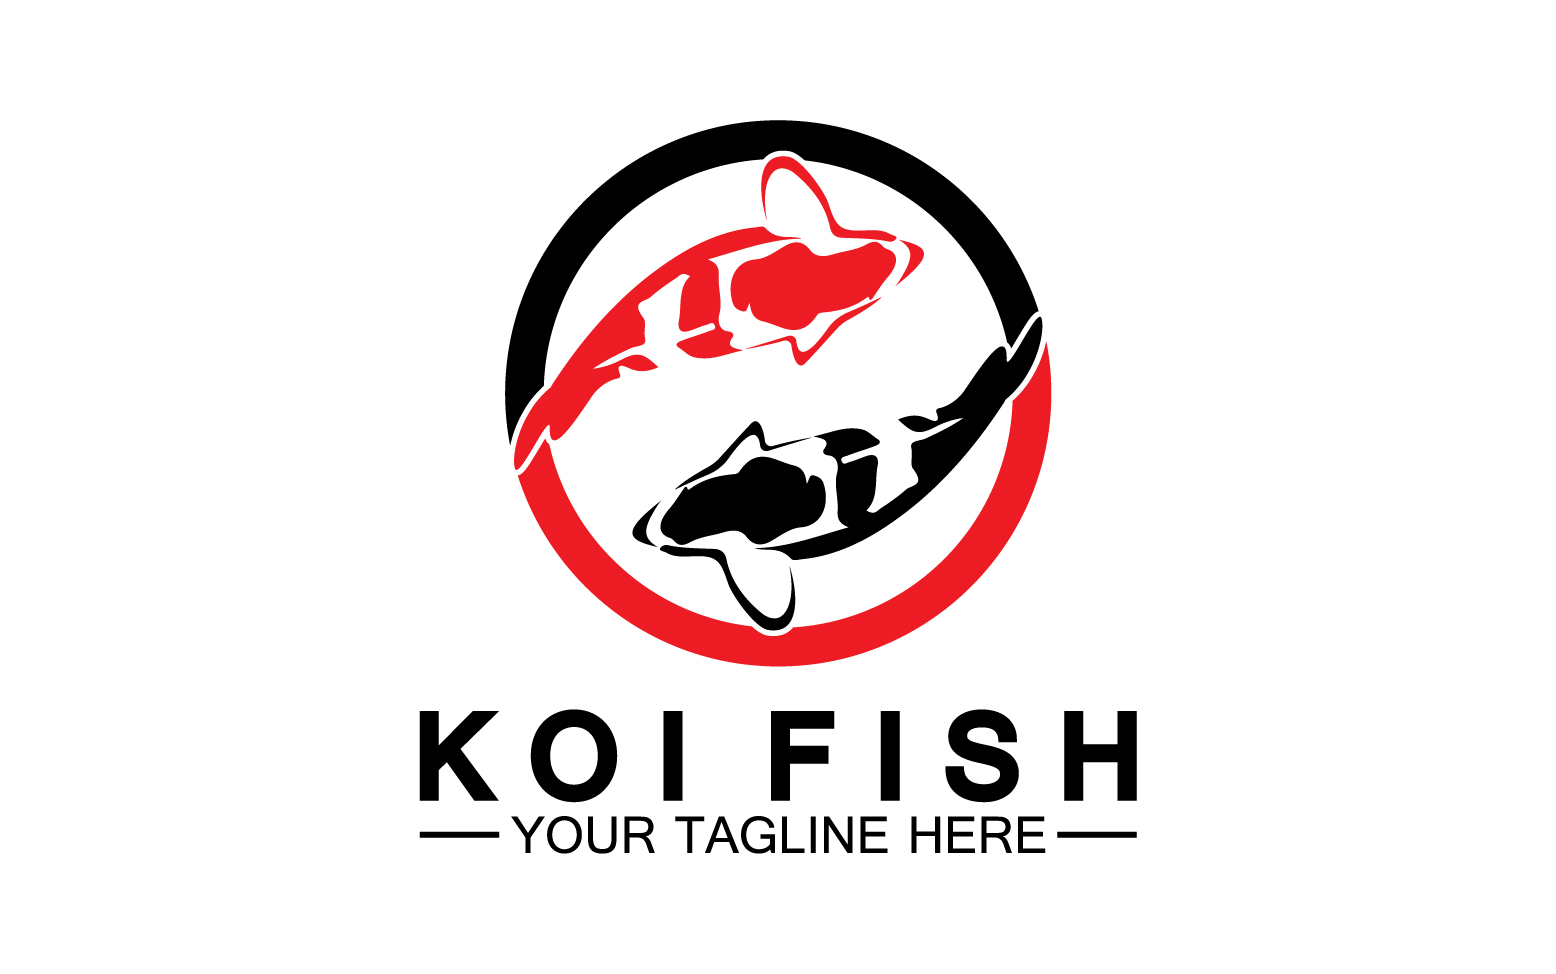 Fish koi black and red icon logo vector v49